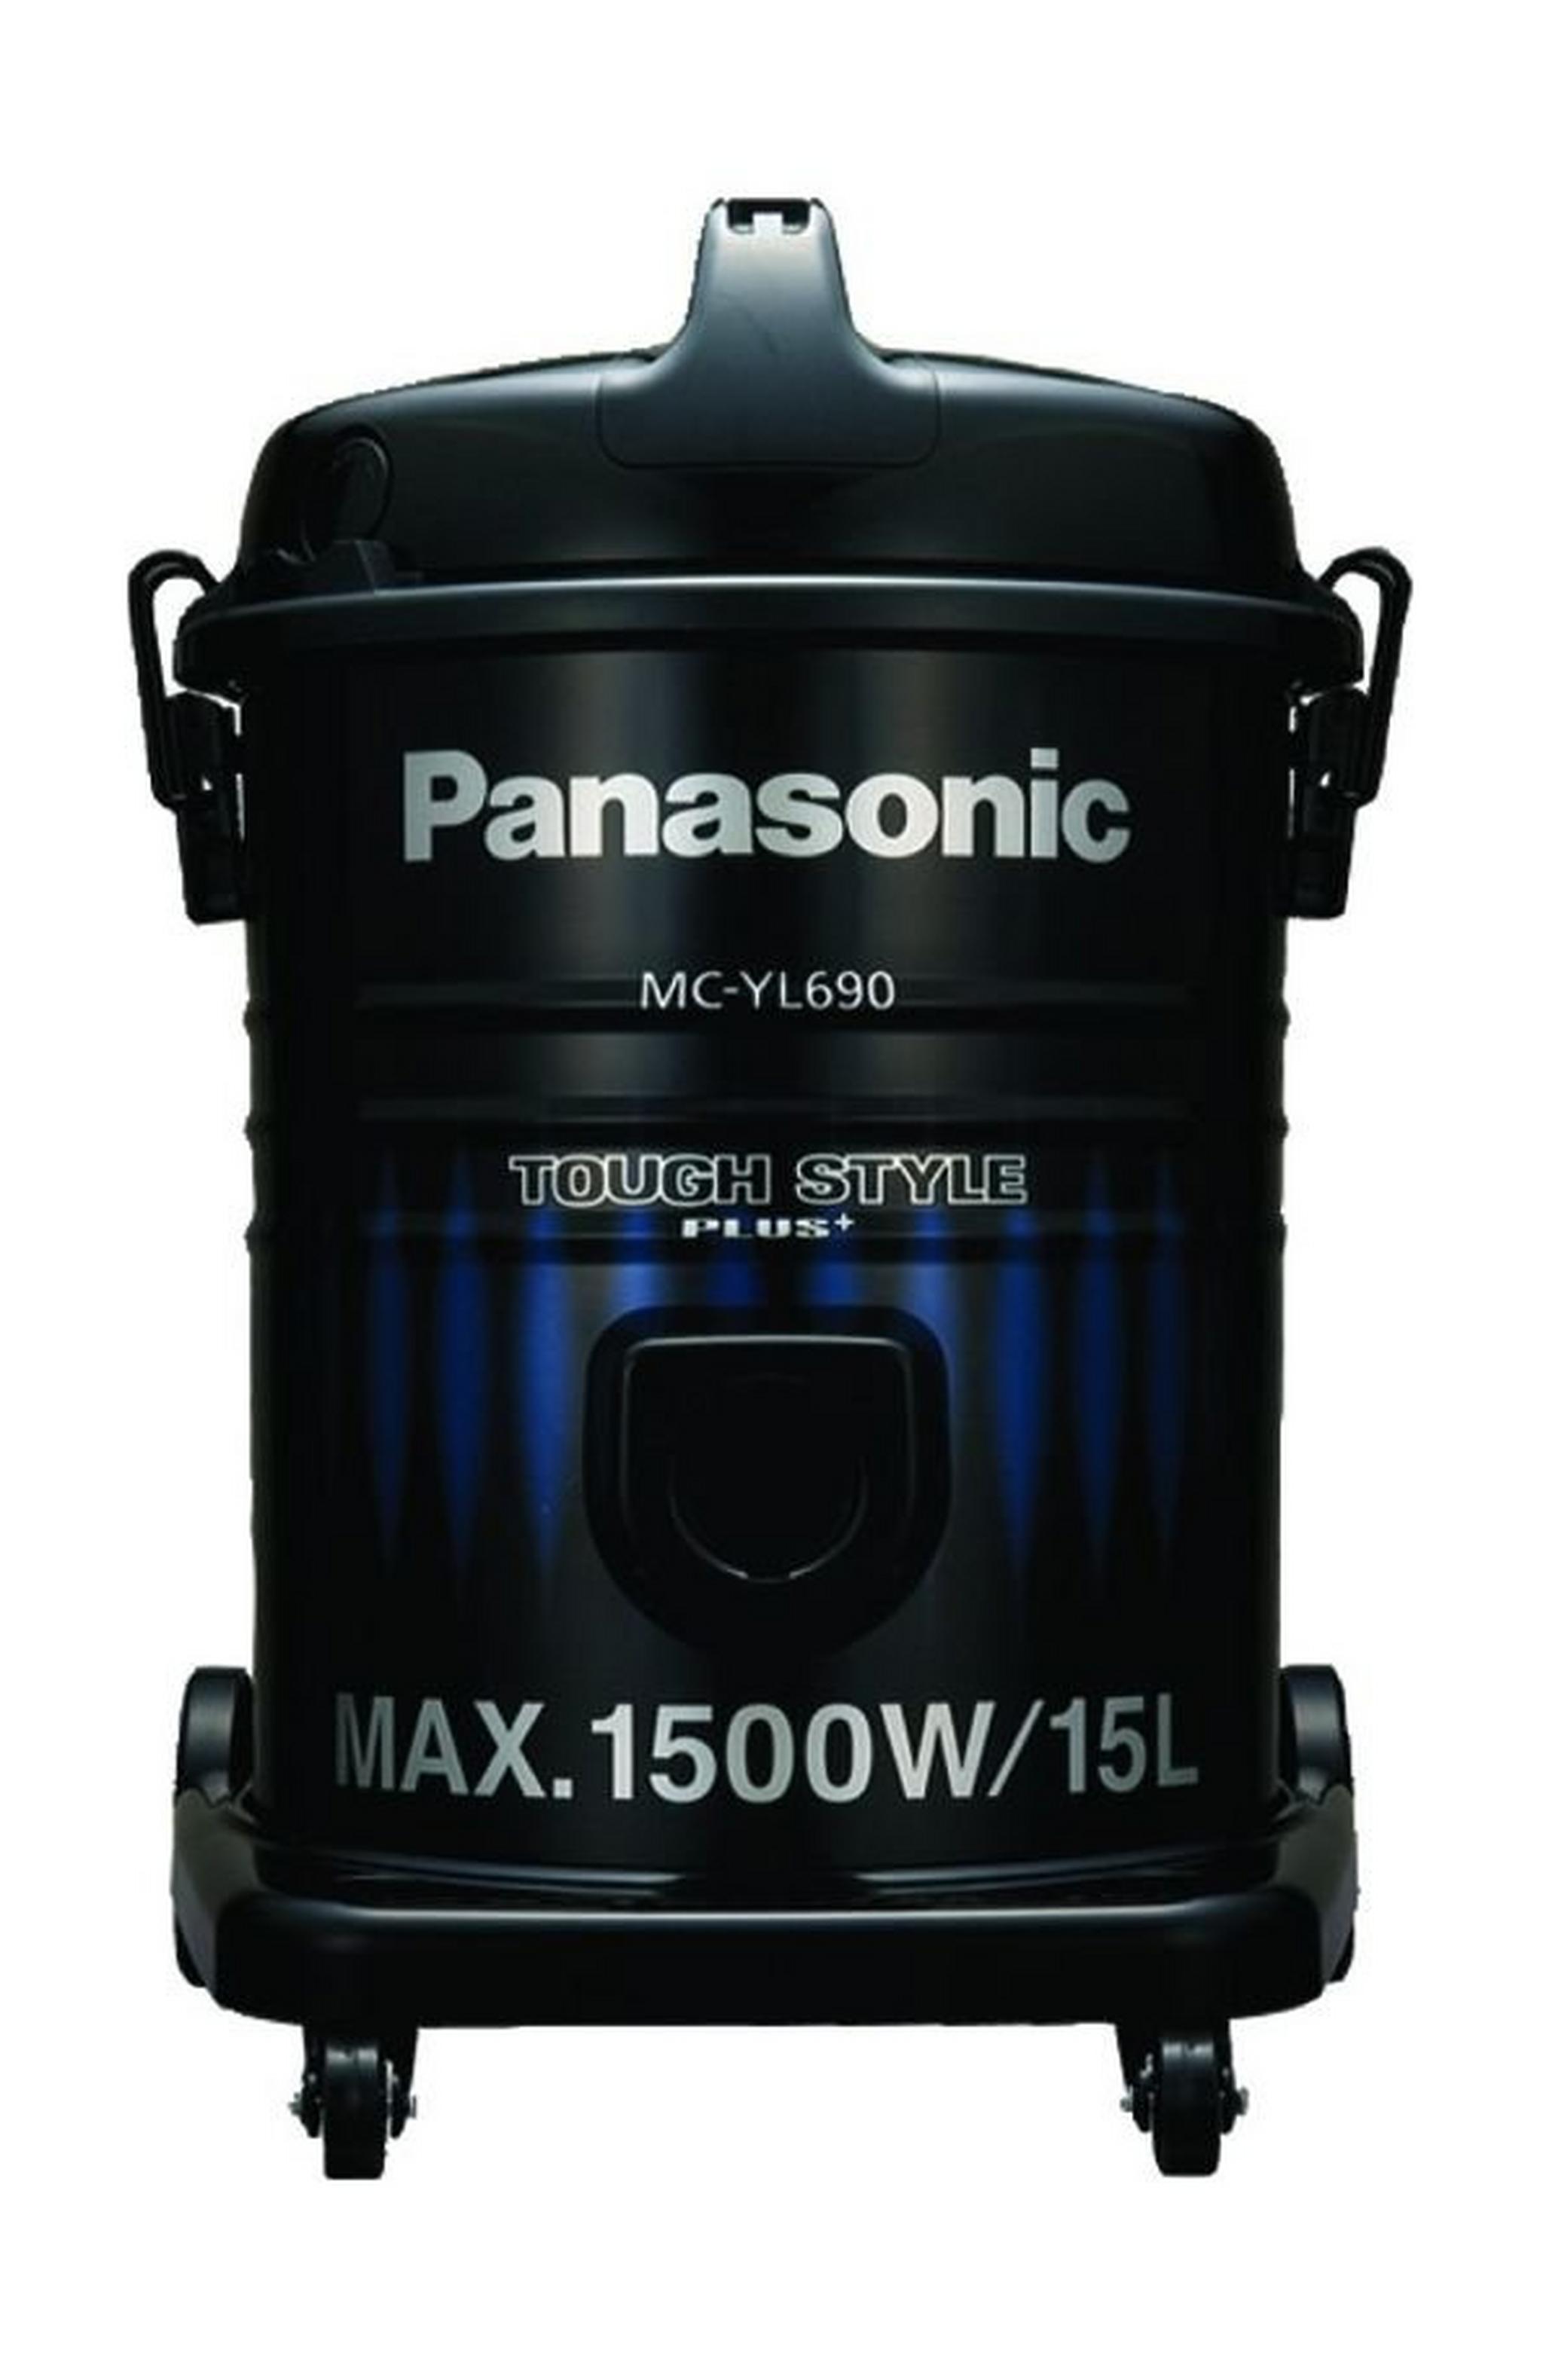 Panasonic Drum Vacuum Cleaner 1500 W, 15 Liter, MC-YL690A747 - Black